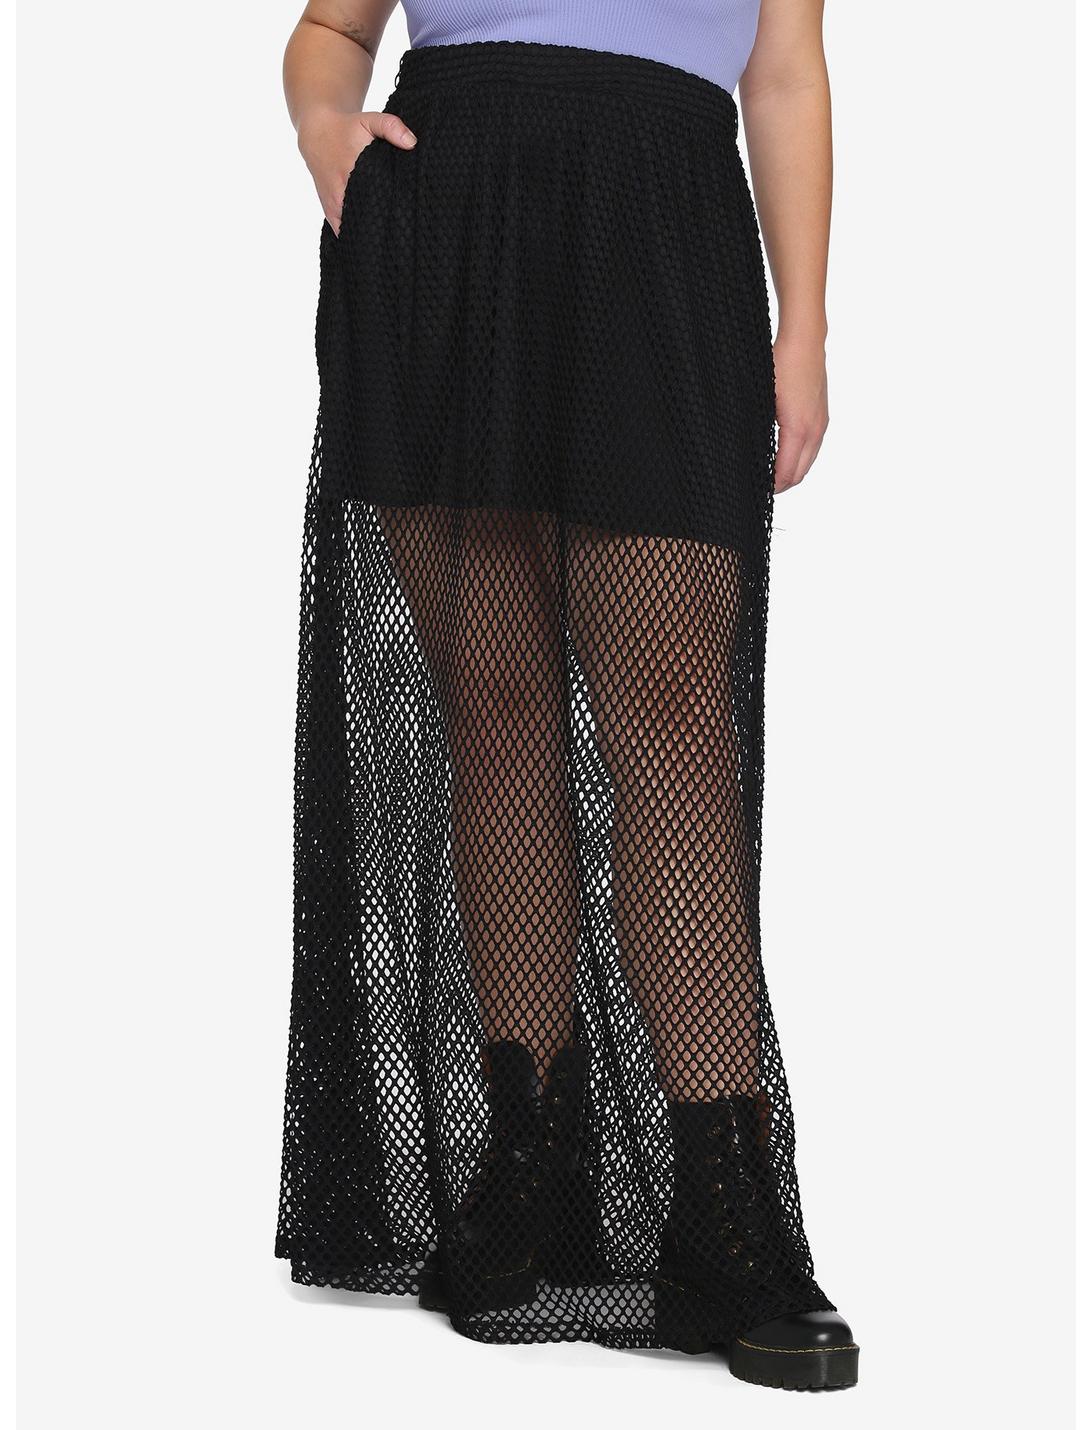 Mesh Maxi Black Overlay Skirt Plus Size, BLACK, hi-res